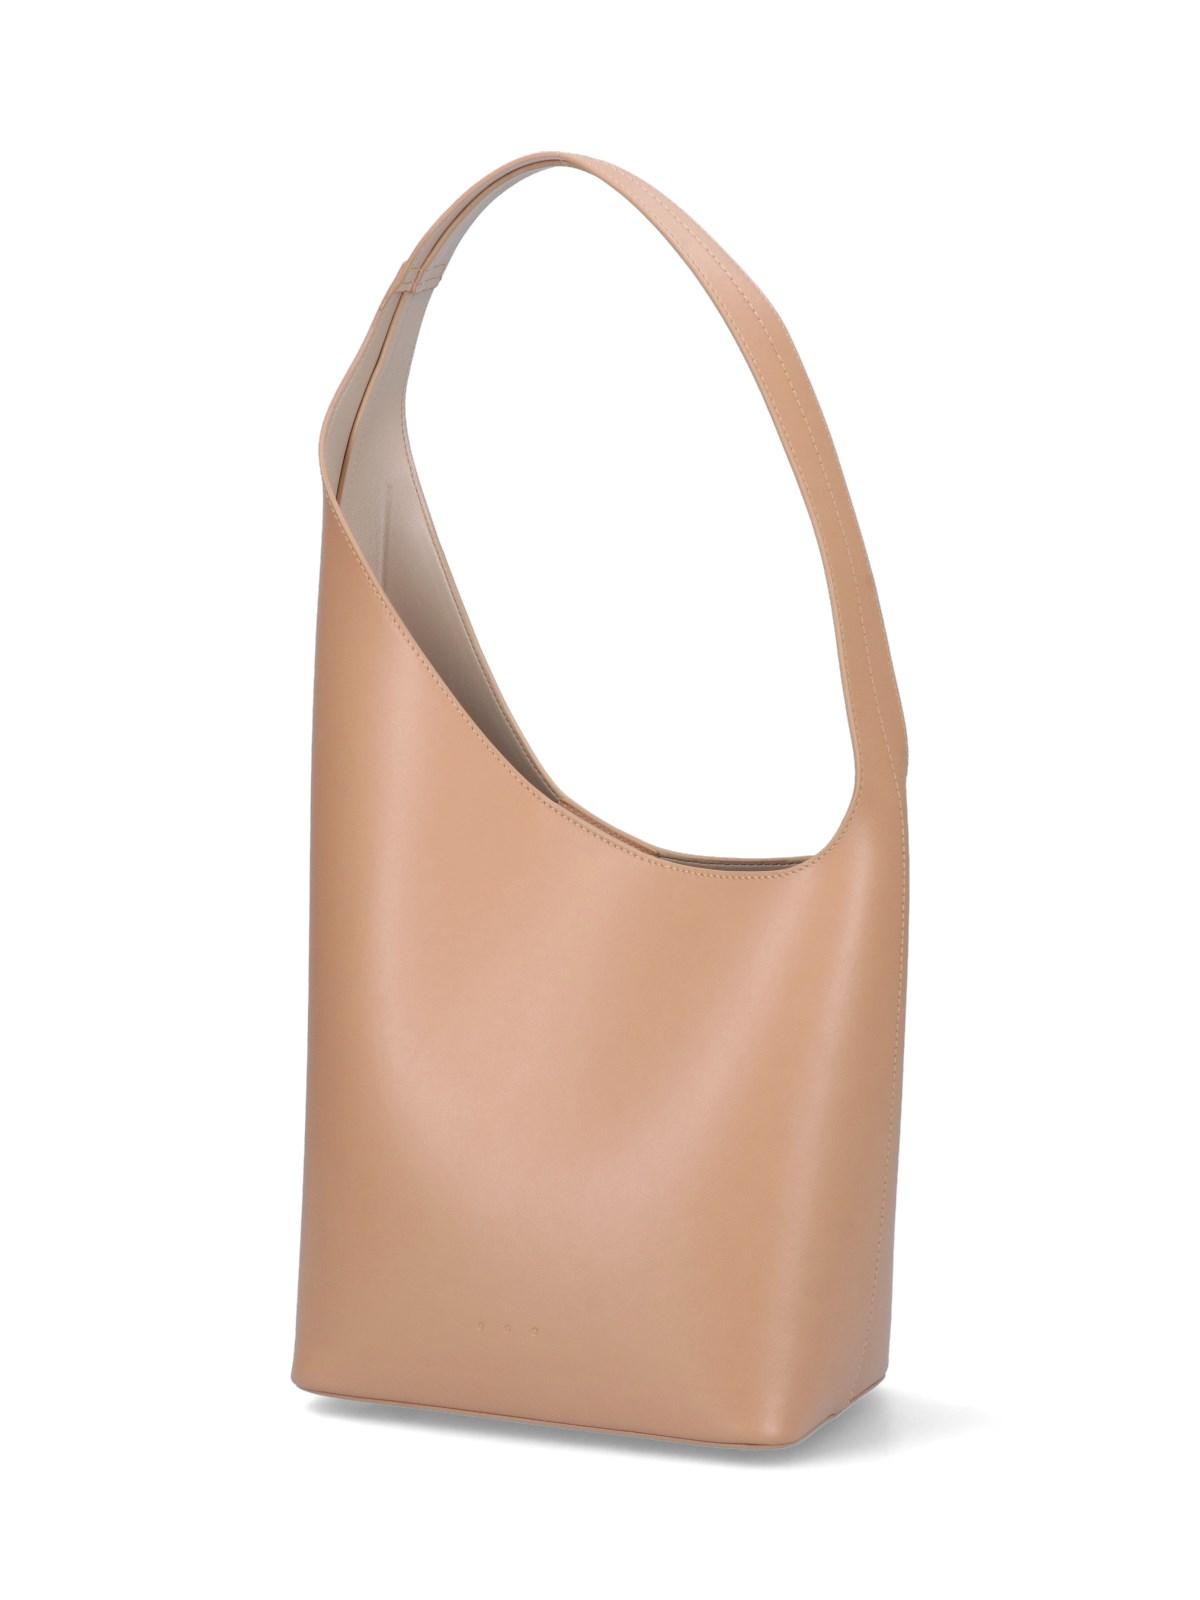 Aesther Ekme + Aesther Ekme Flat shoulder bag